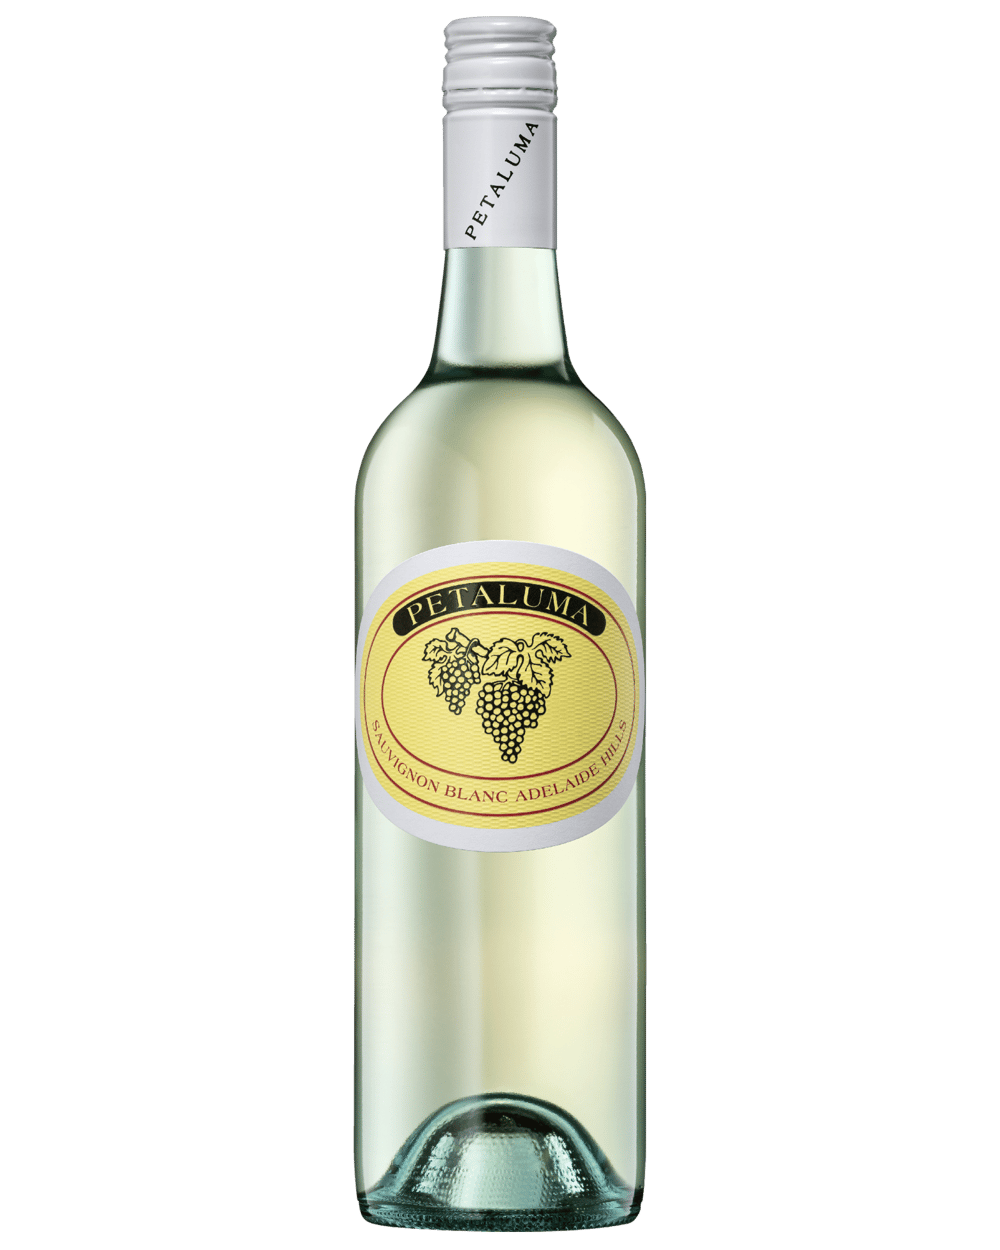 Petaluma White Label Pinot Grigio